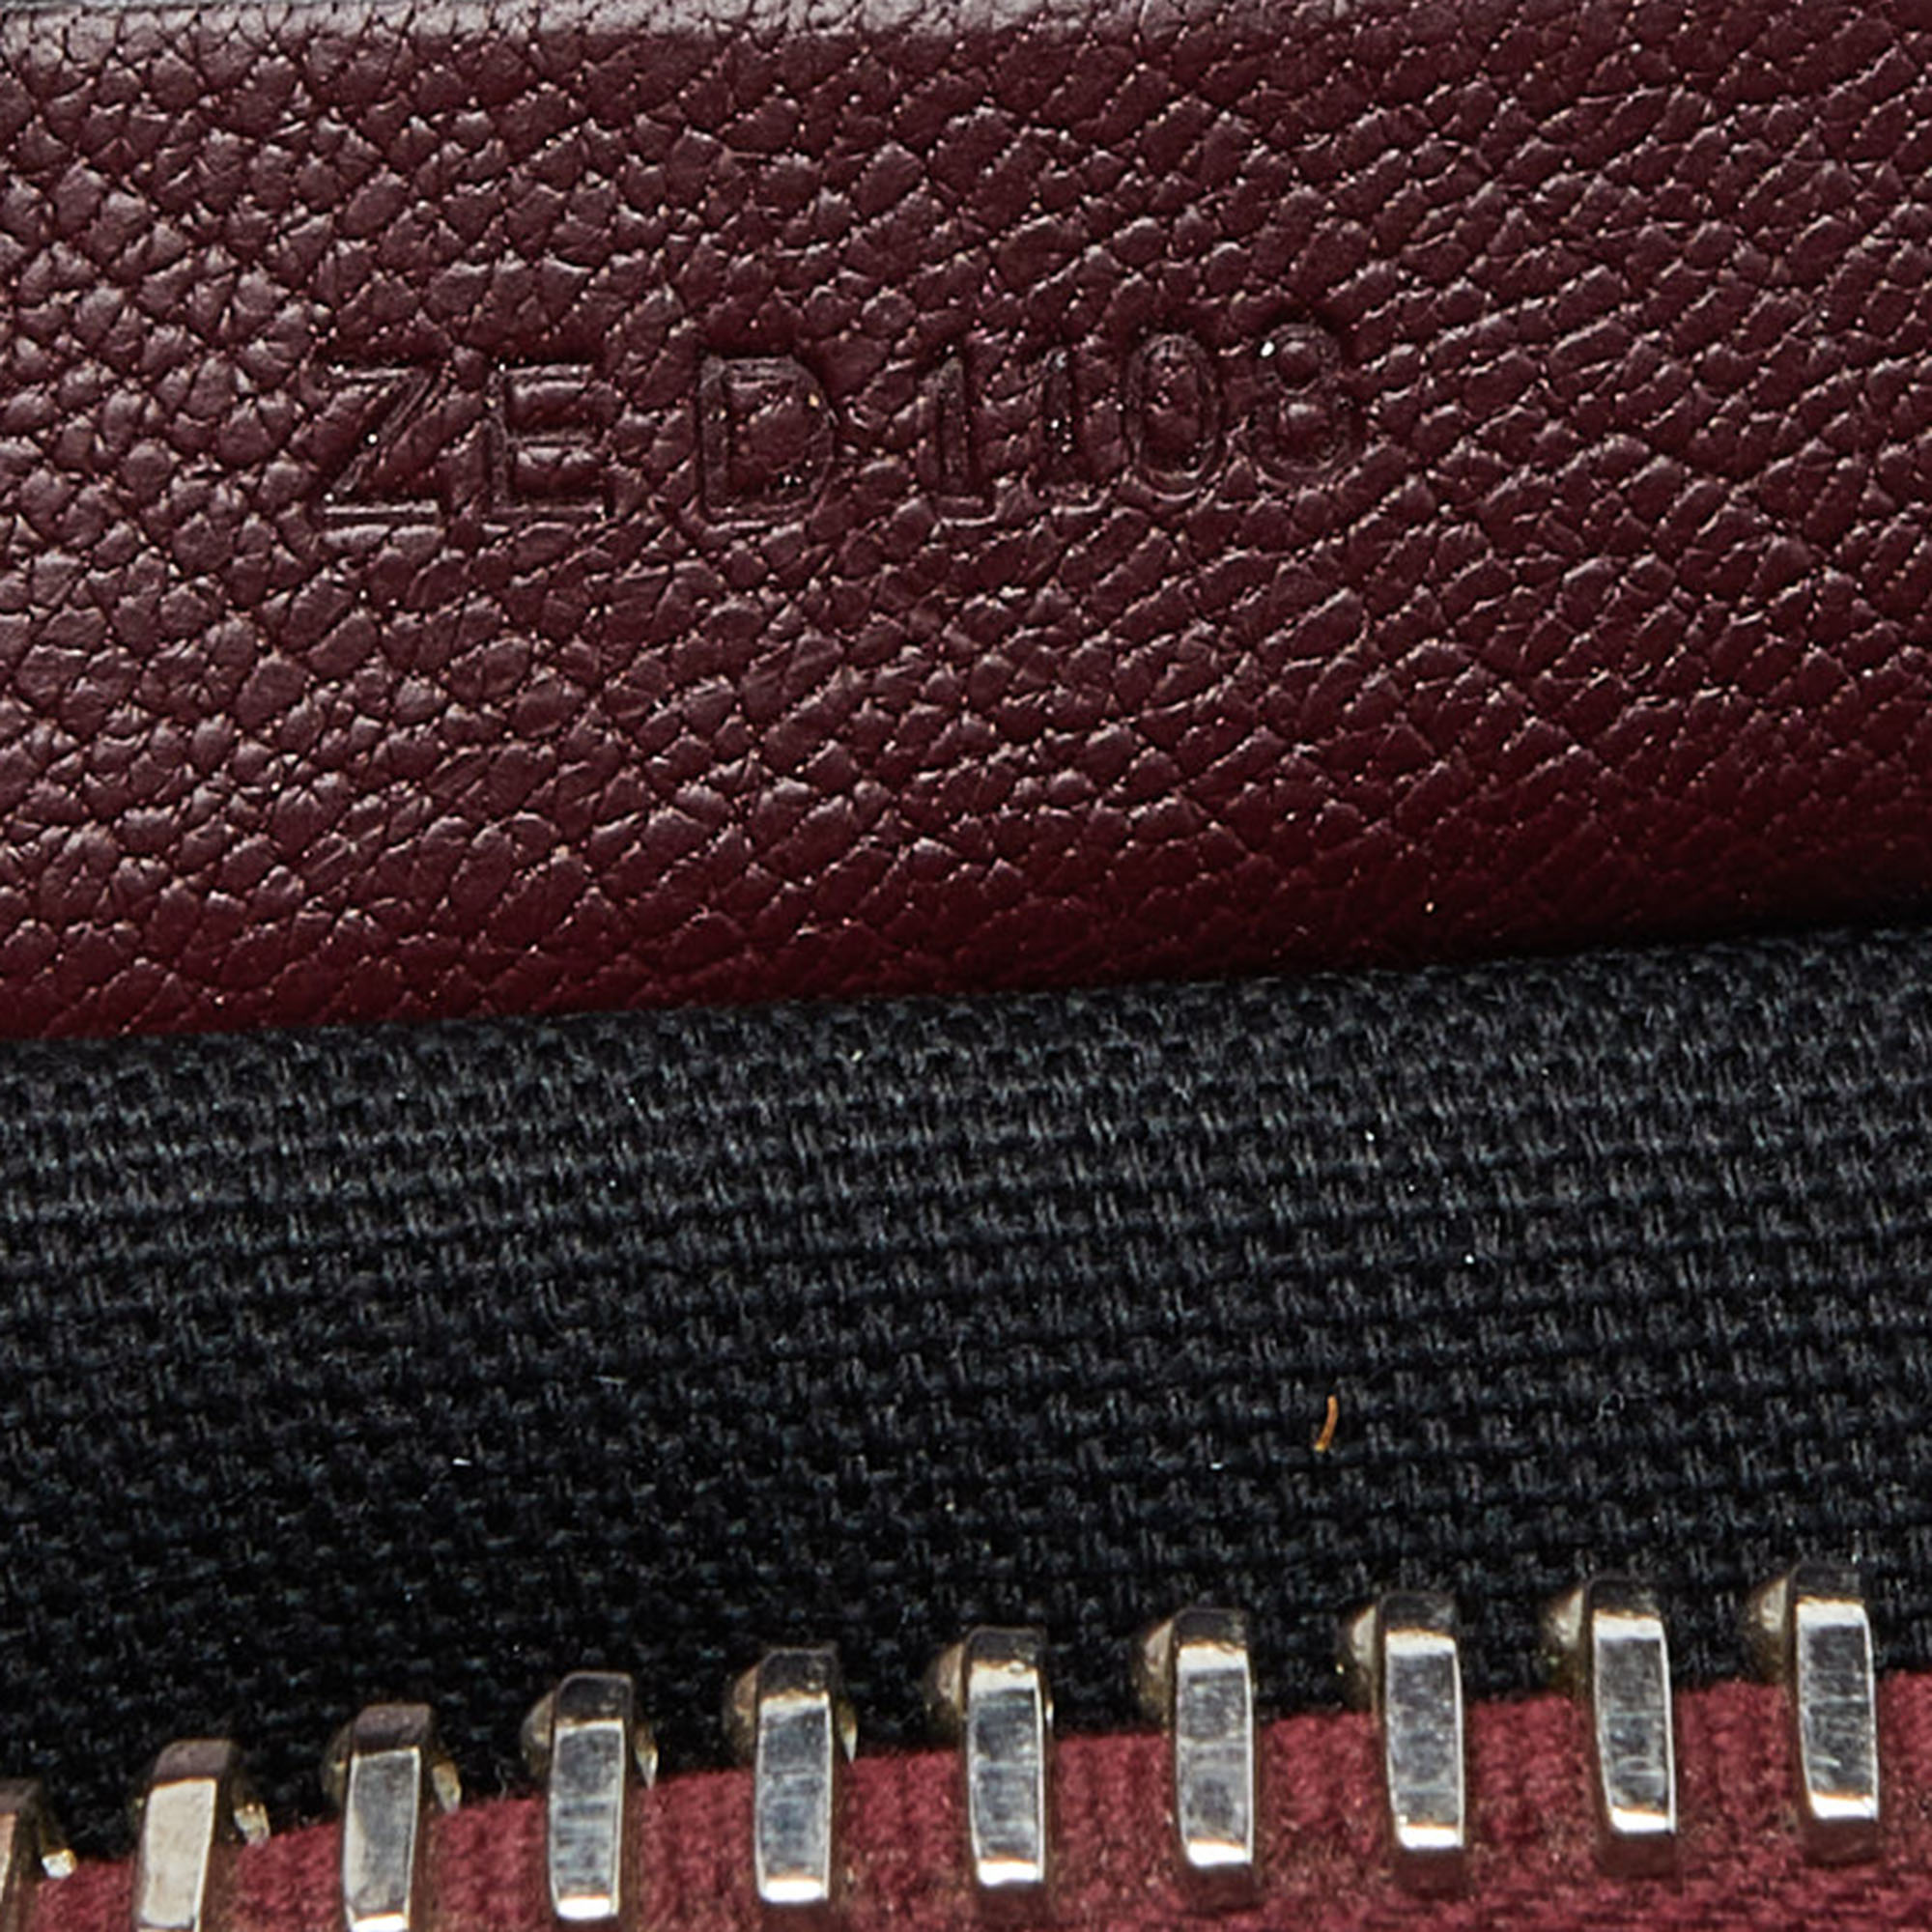 Givenchy Burgundy Leather Mini Antigona Satchel